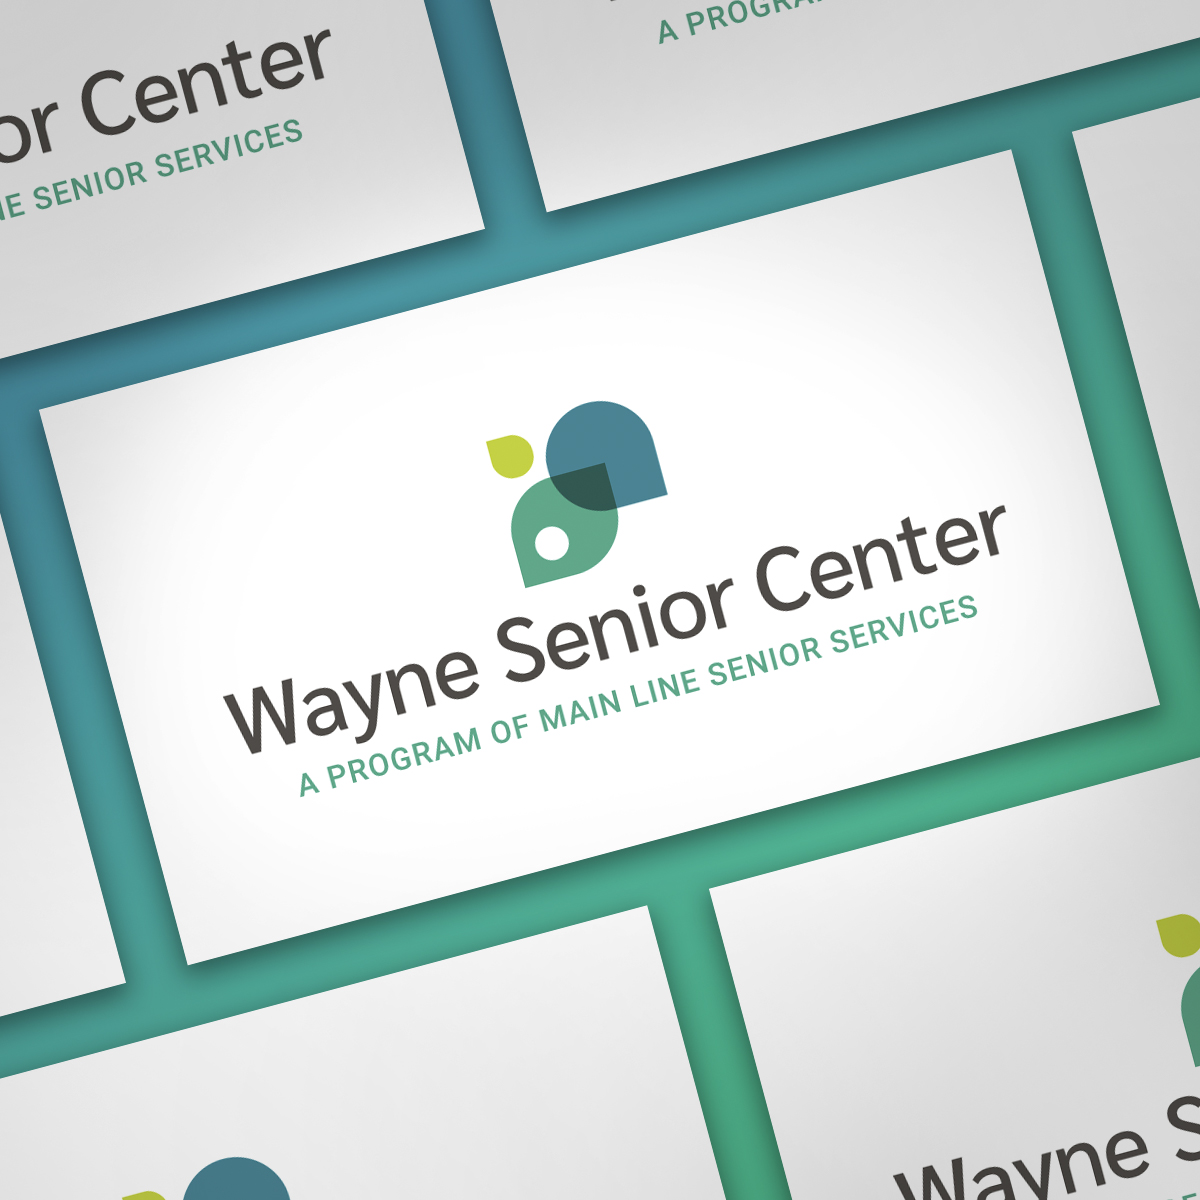 Wayne Senior Center Website & Collateral